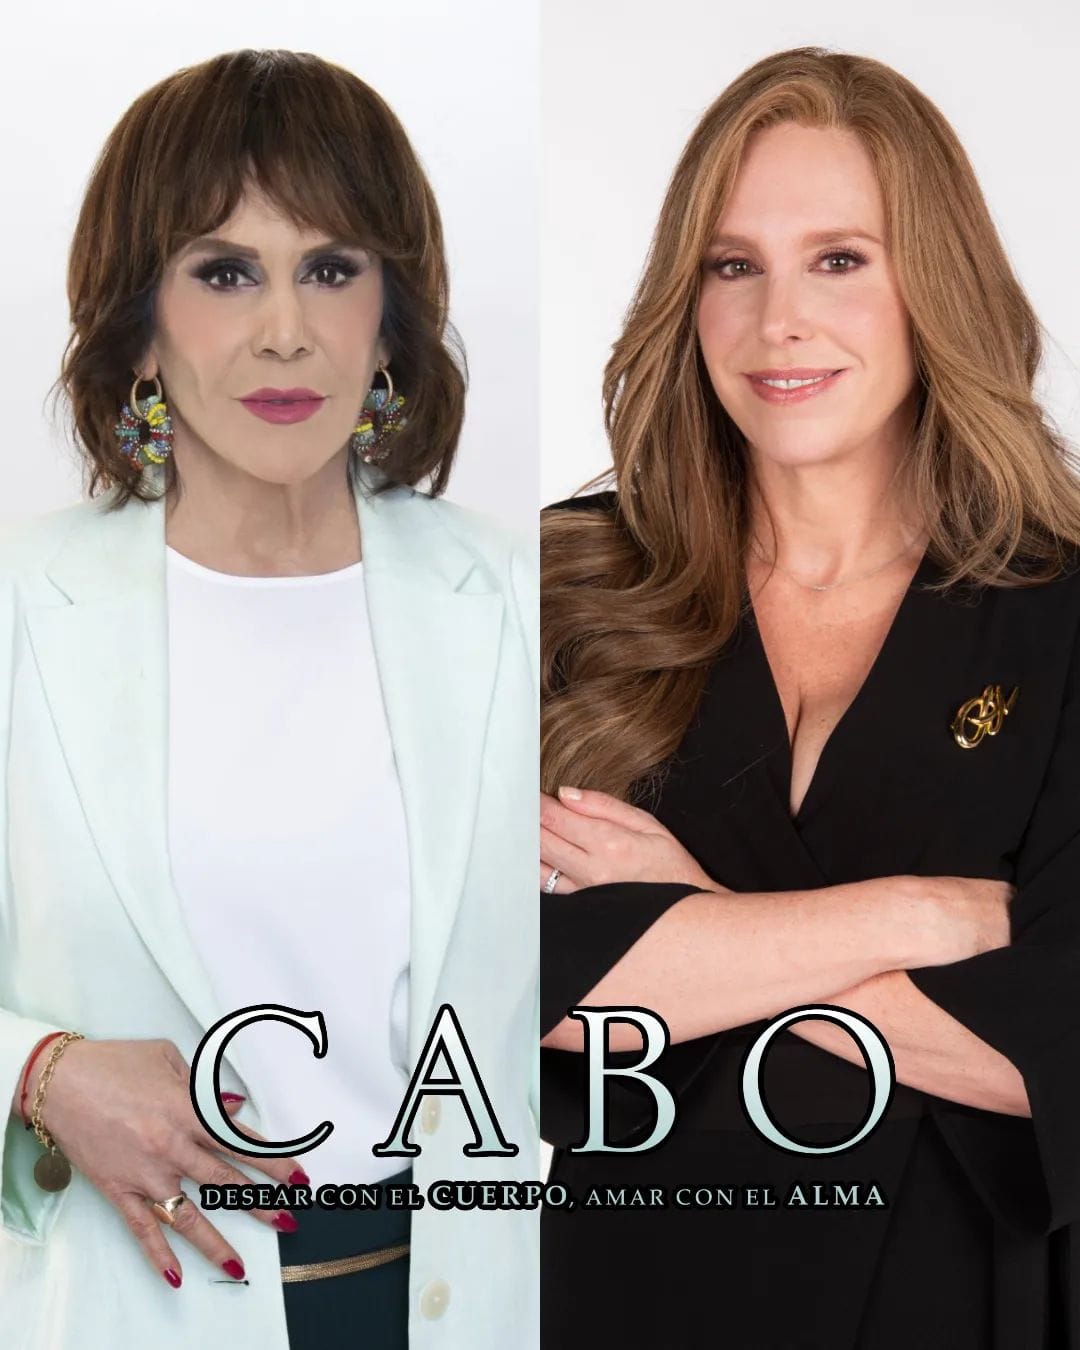 Azela Robinson se integra esta semana al elenco de la telenovela “Cabo”